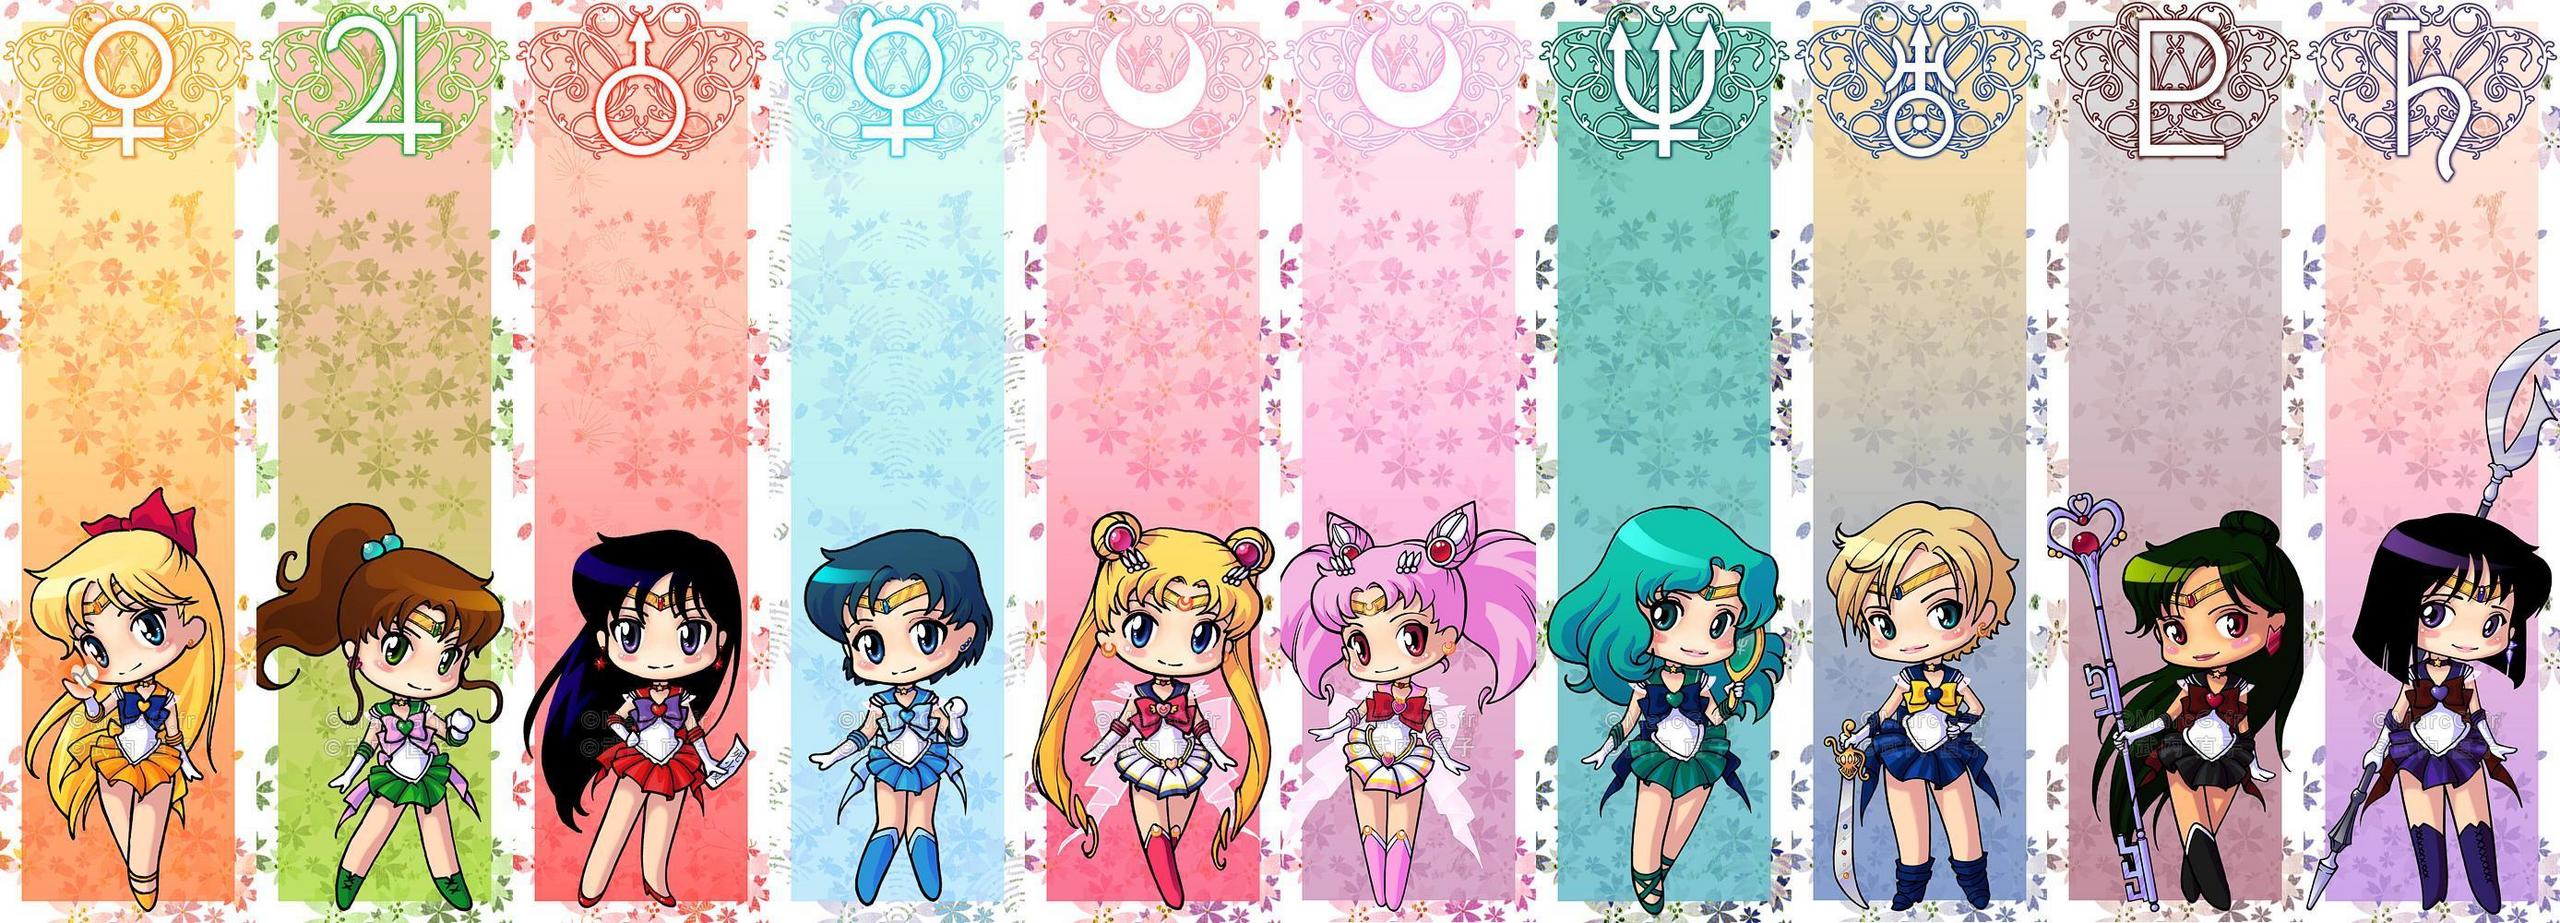 Free download Sailor Moon images Sailor Moon wallpaper photos